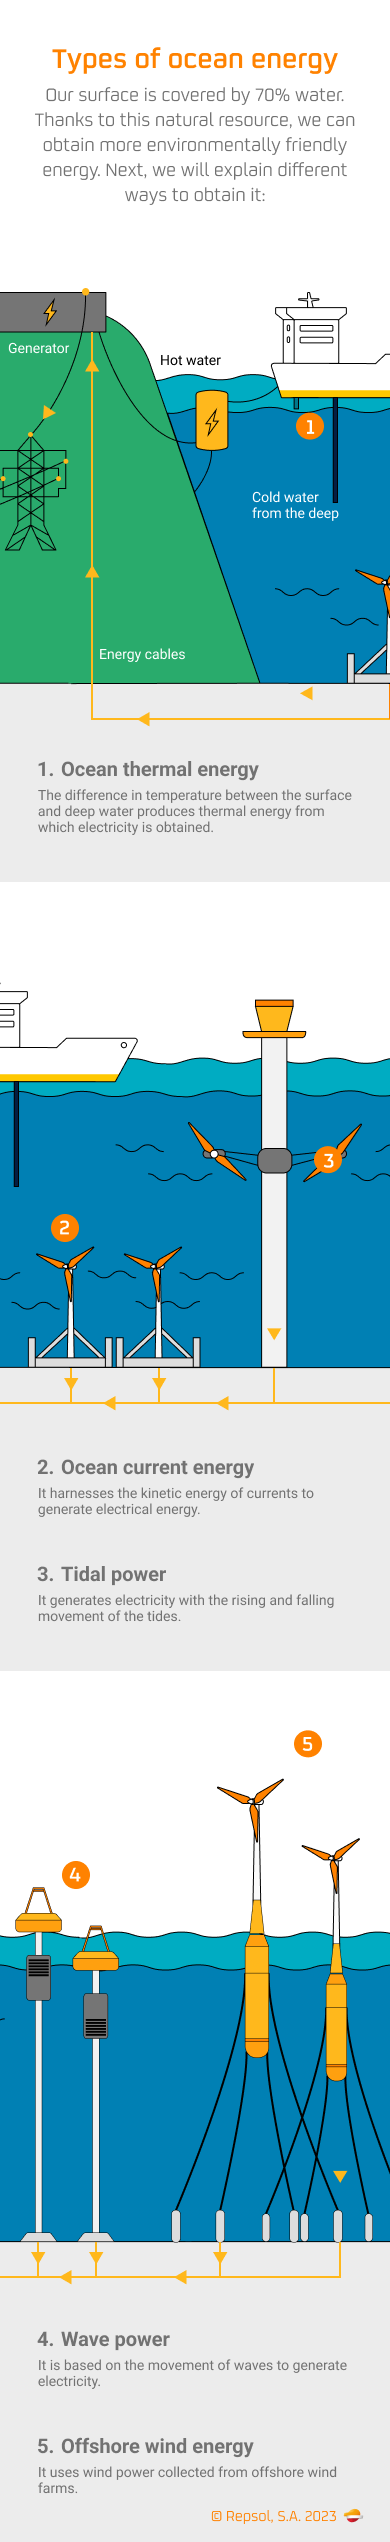 Ocean energy infographic